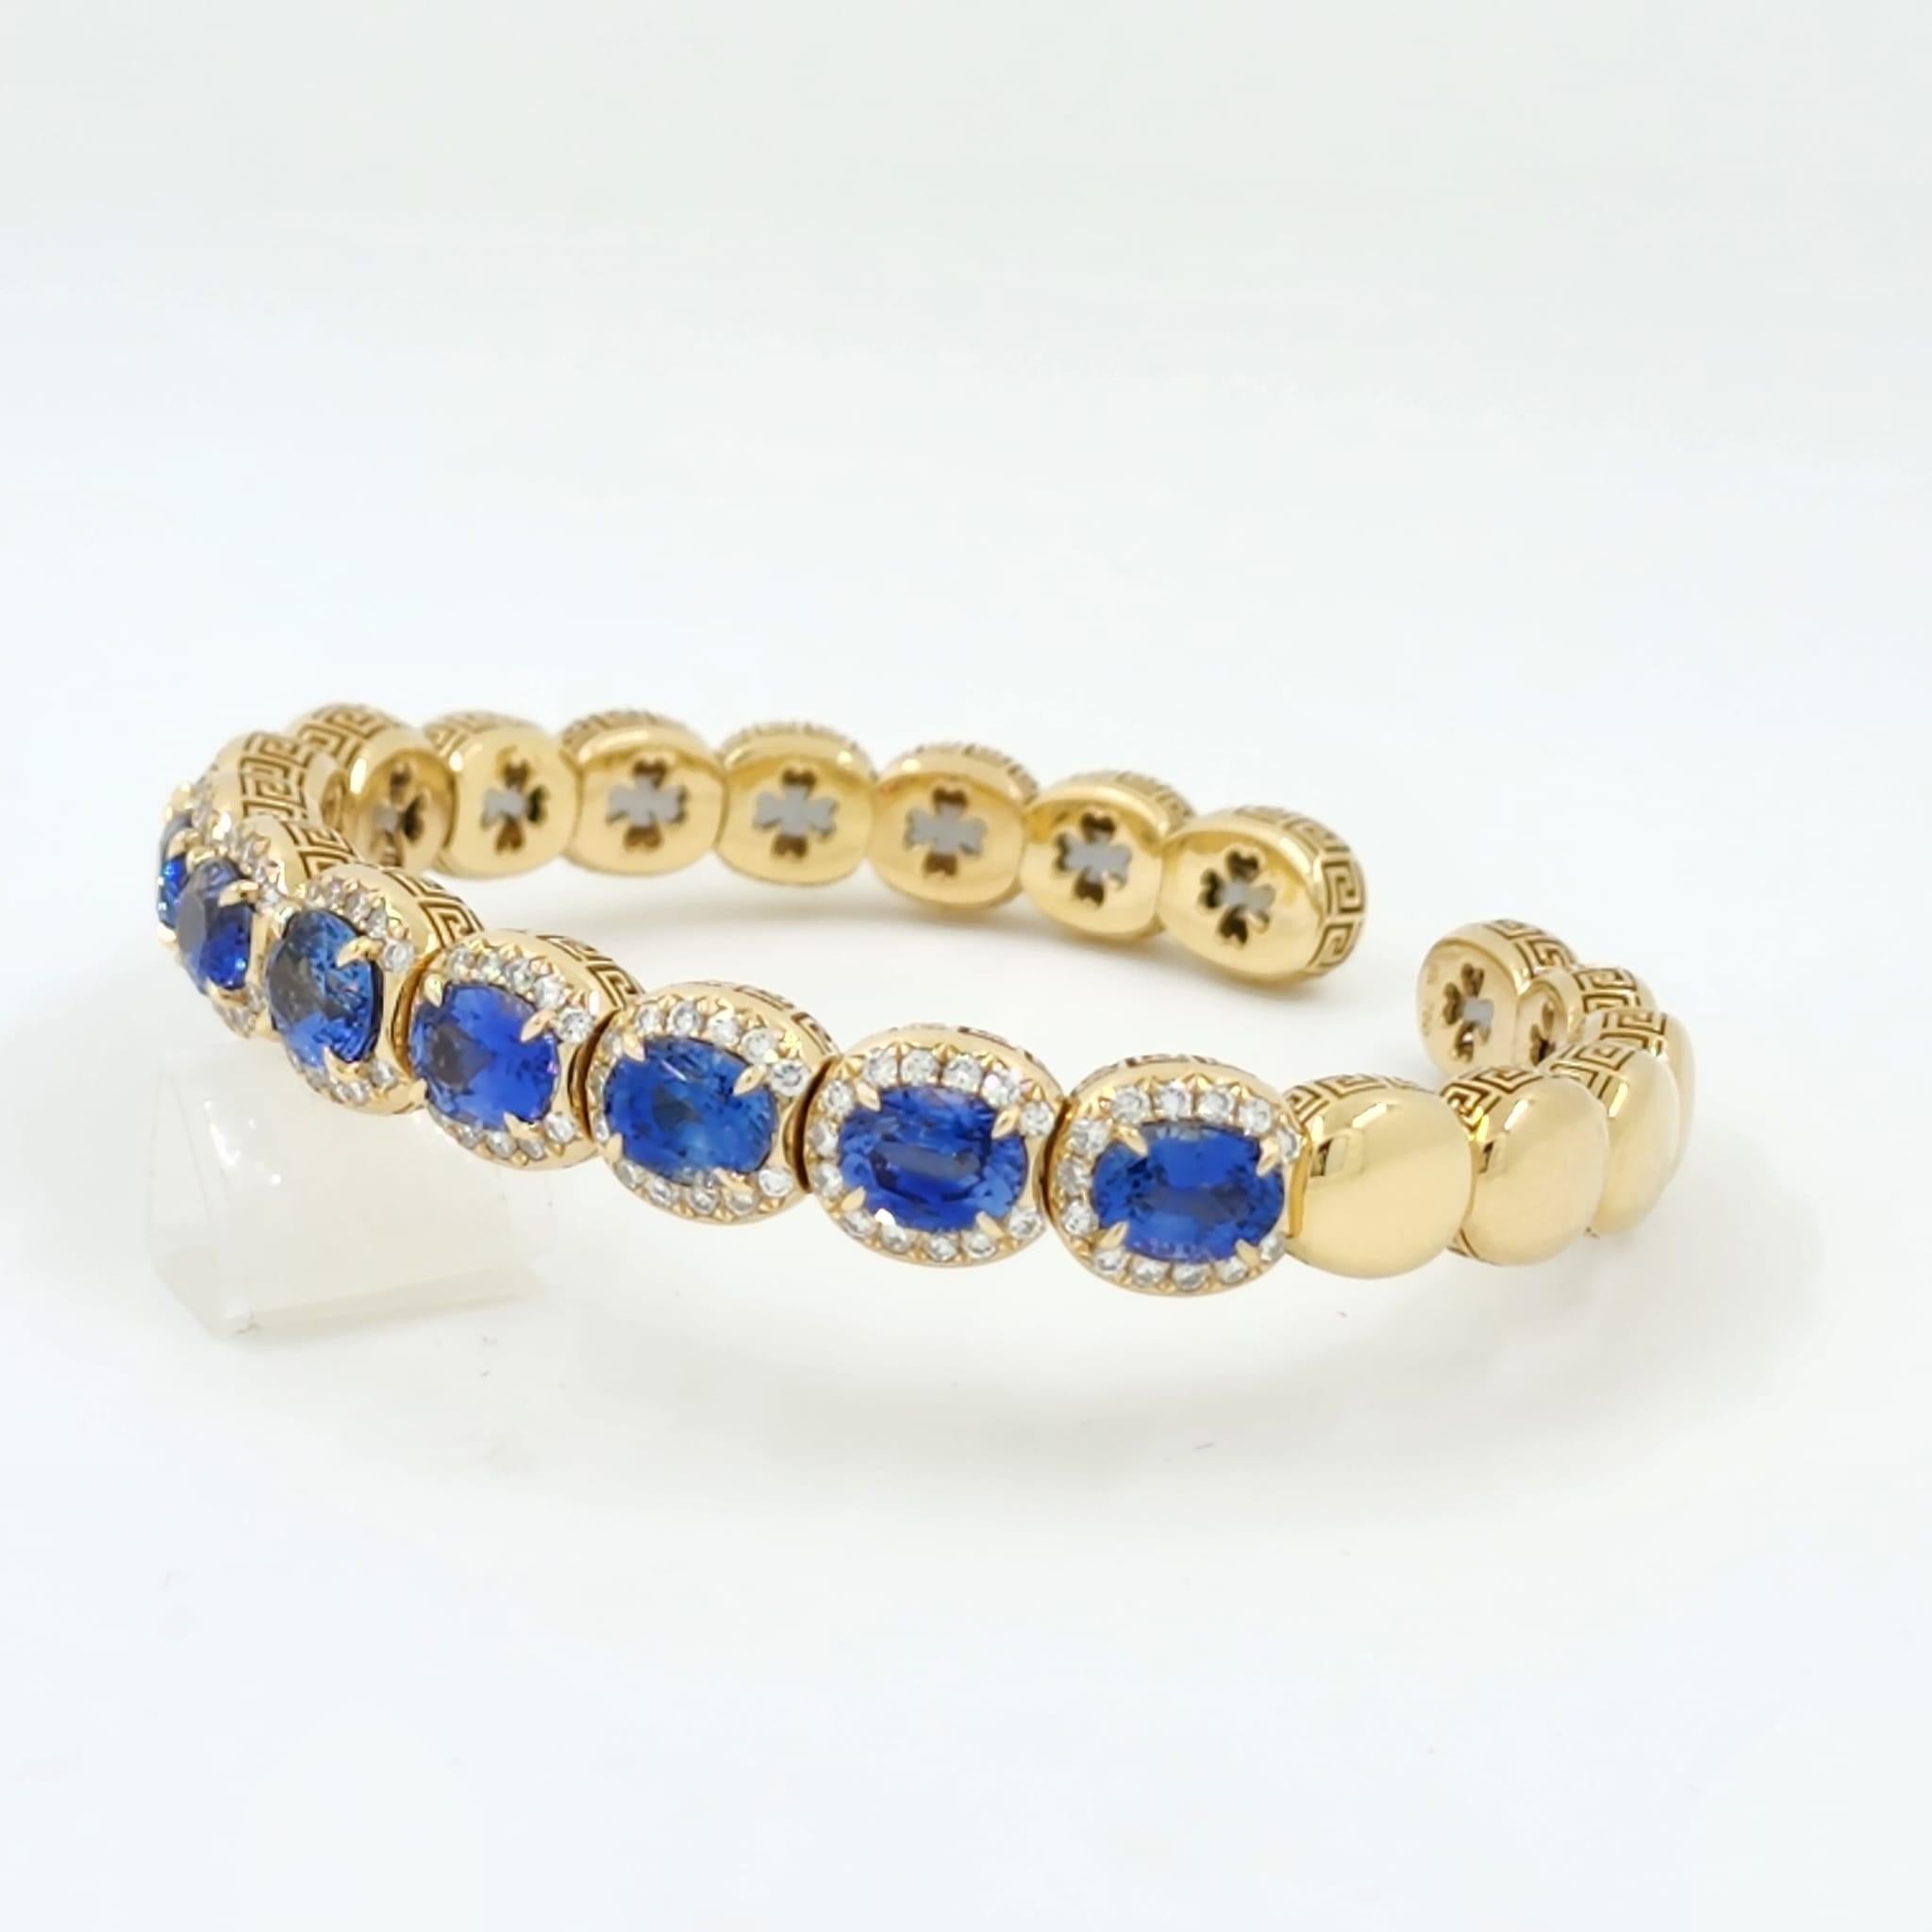 Contemporary 9.49 Carats Blue Sapphire Diamond Bangle Bracelet in 18 Karat Yellow Gold For Sale